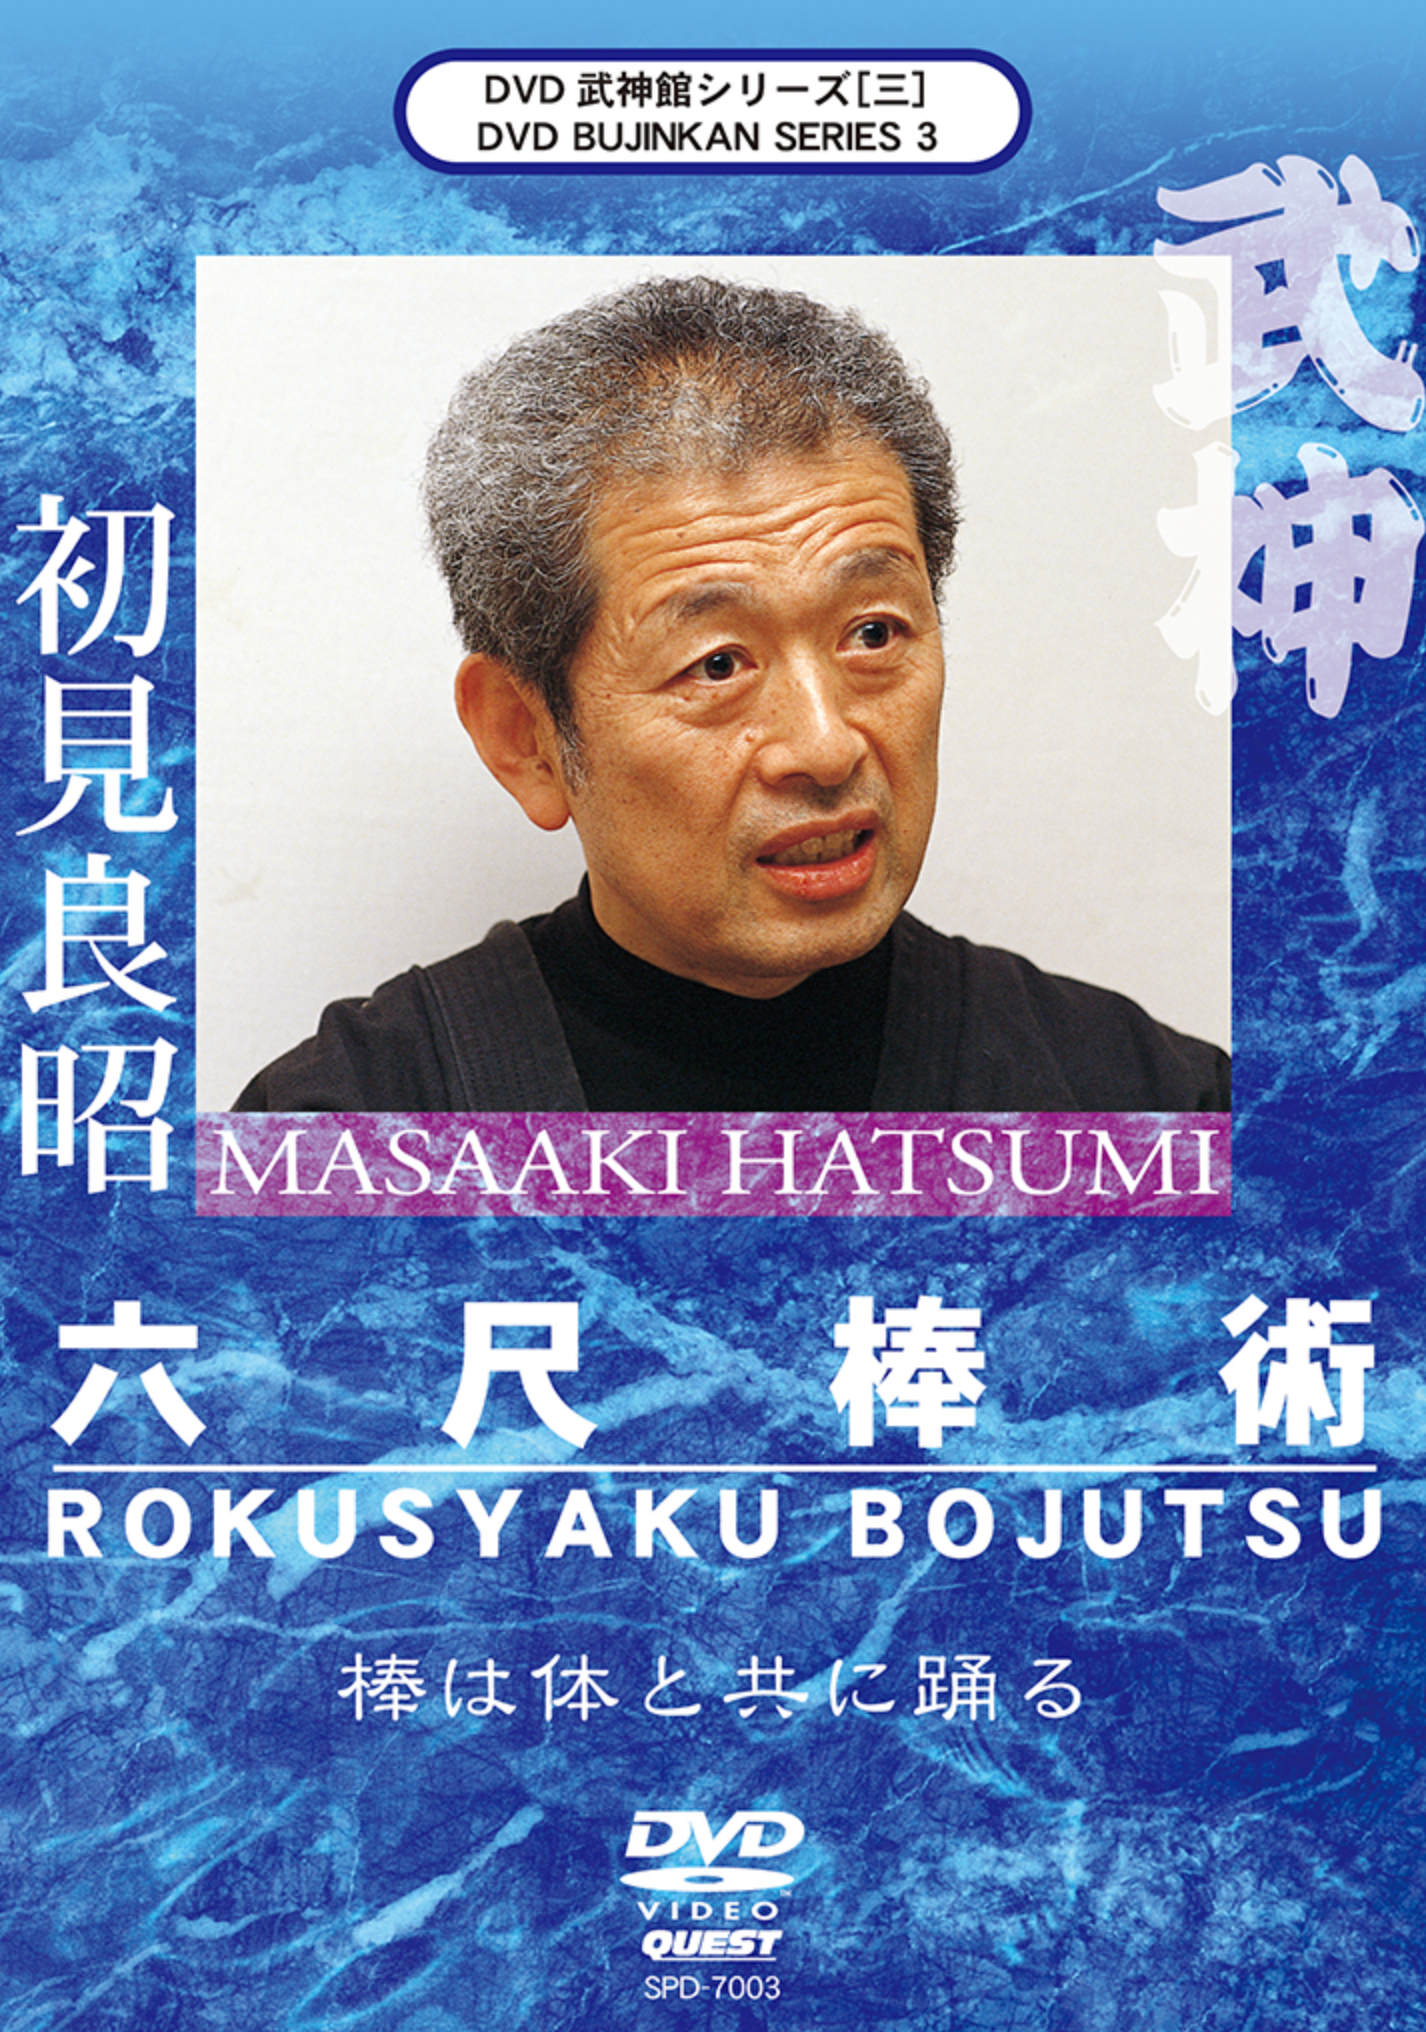 Bujinkan DVD Series 3: Rokushaku Bojutsu with Masaaki Hatsumi - Budovideos Inc